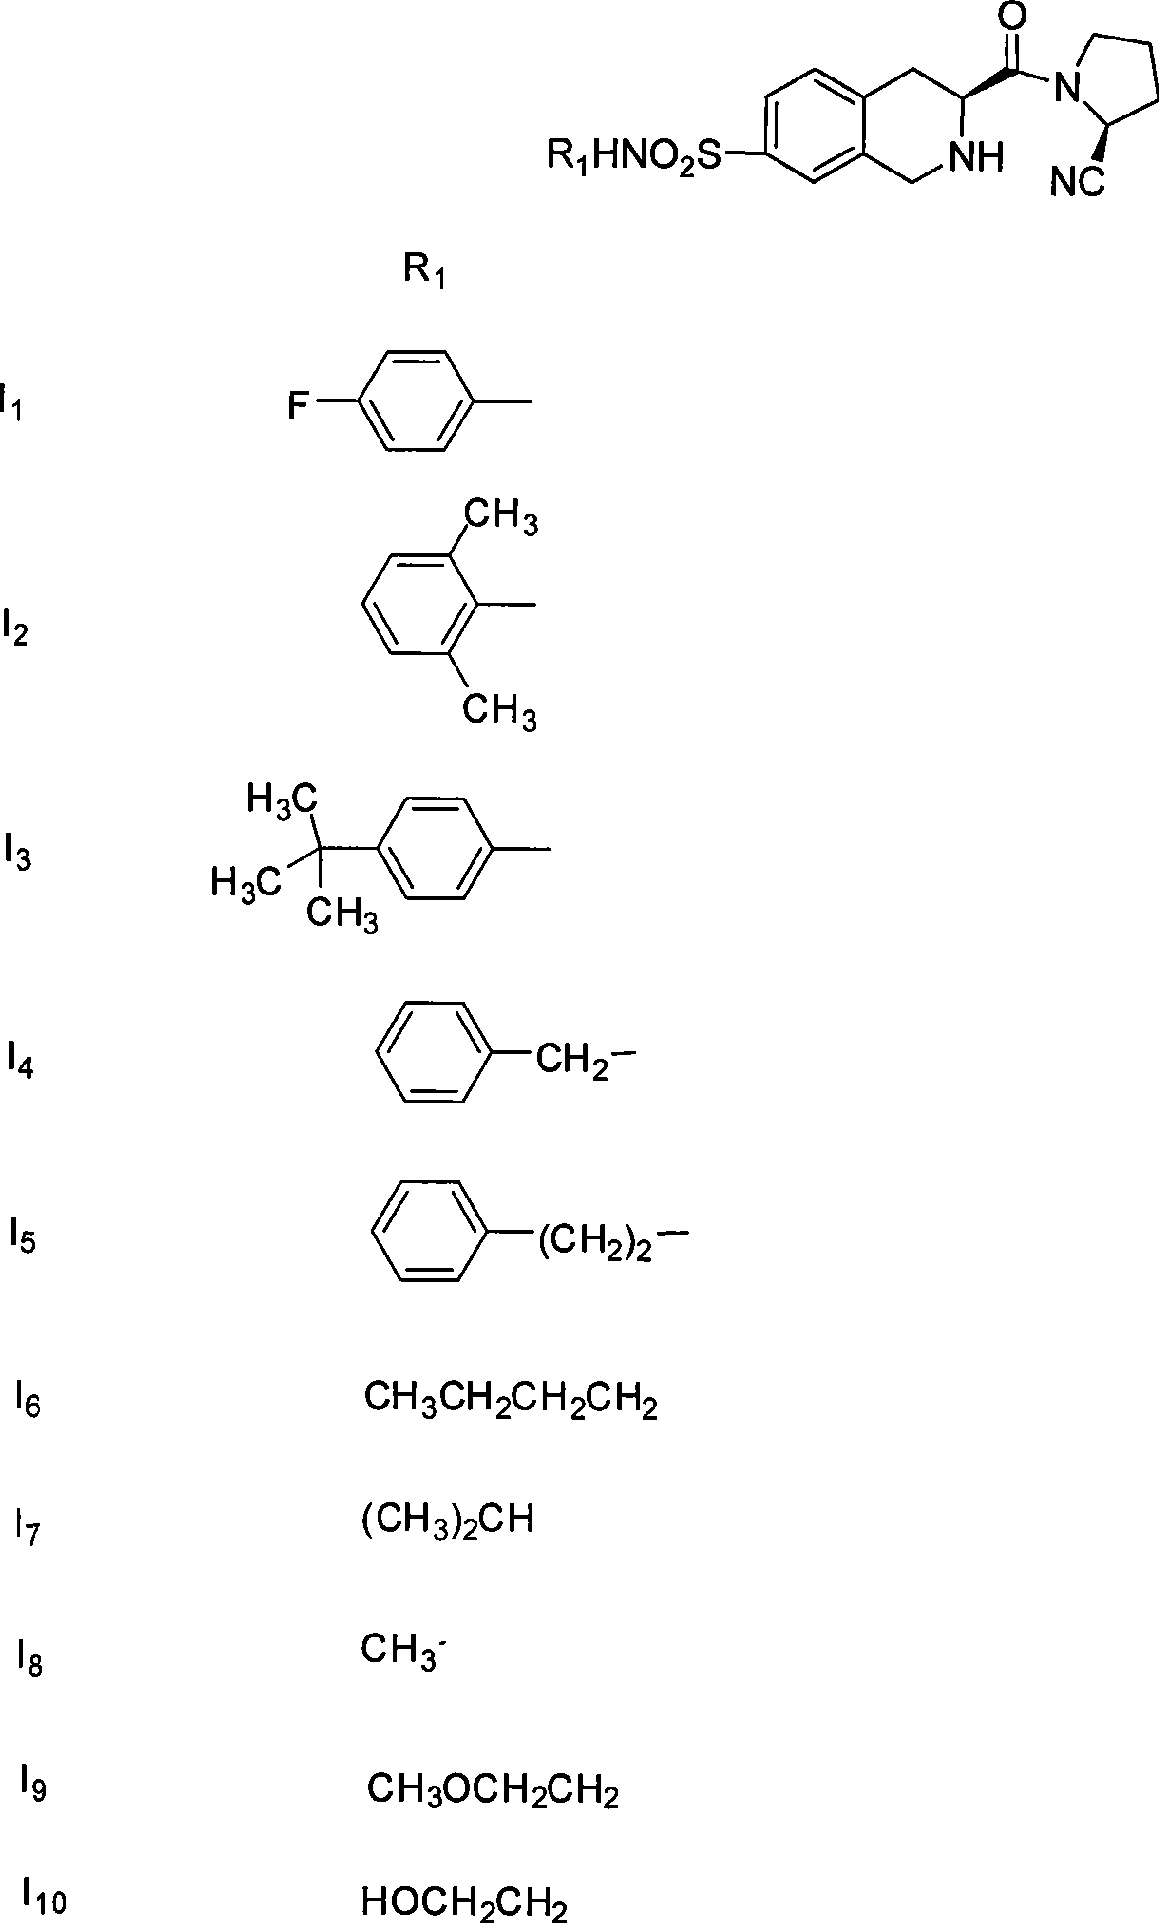 Uses of substituted tetrahydrochysene isoquinoline derivant